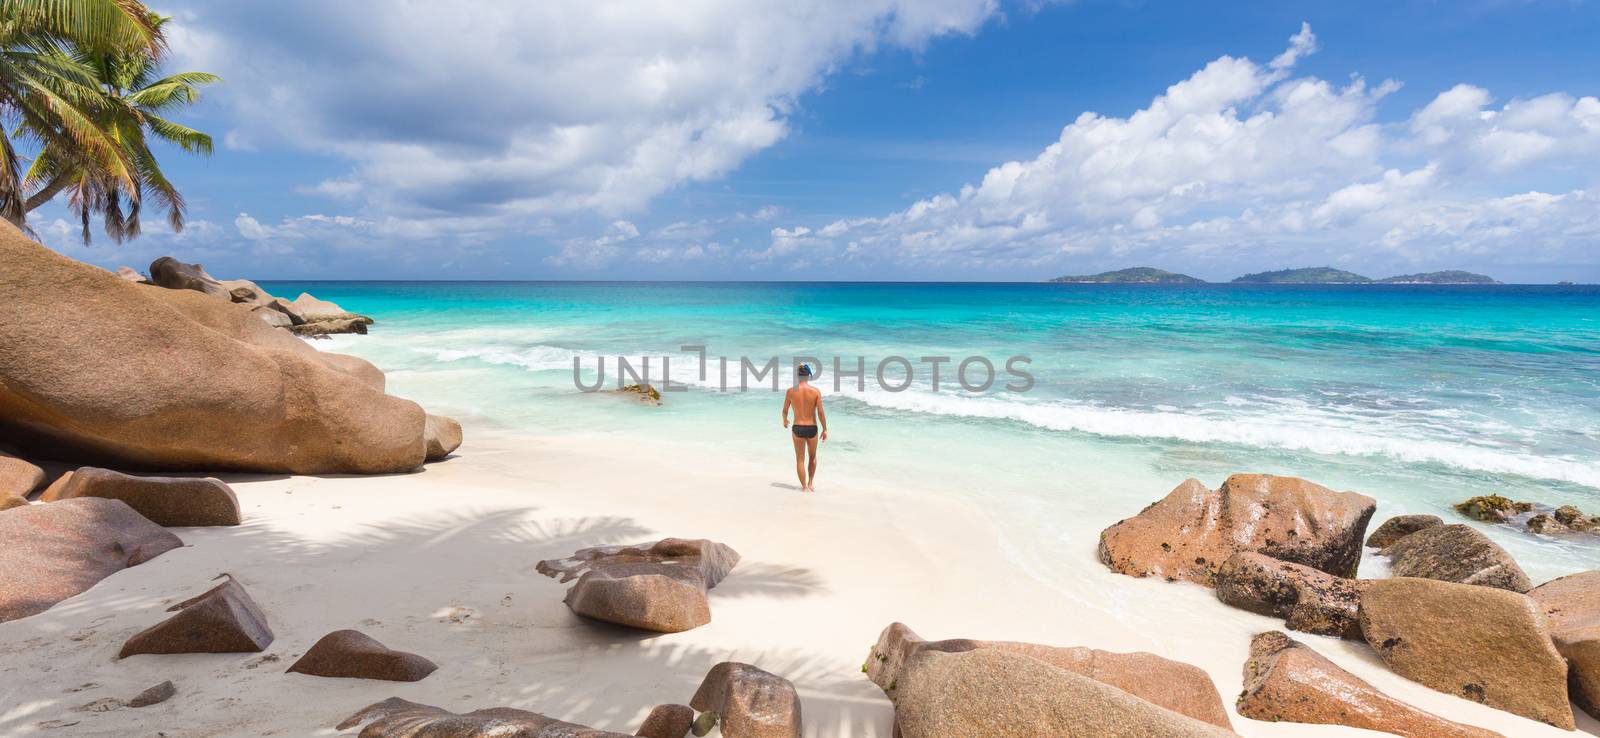 Man enjoying Anse Patates picture perfect beach on La Digue Island, Seychelles. by kasto